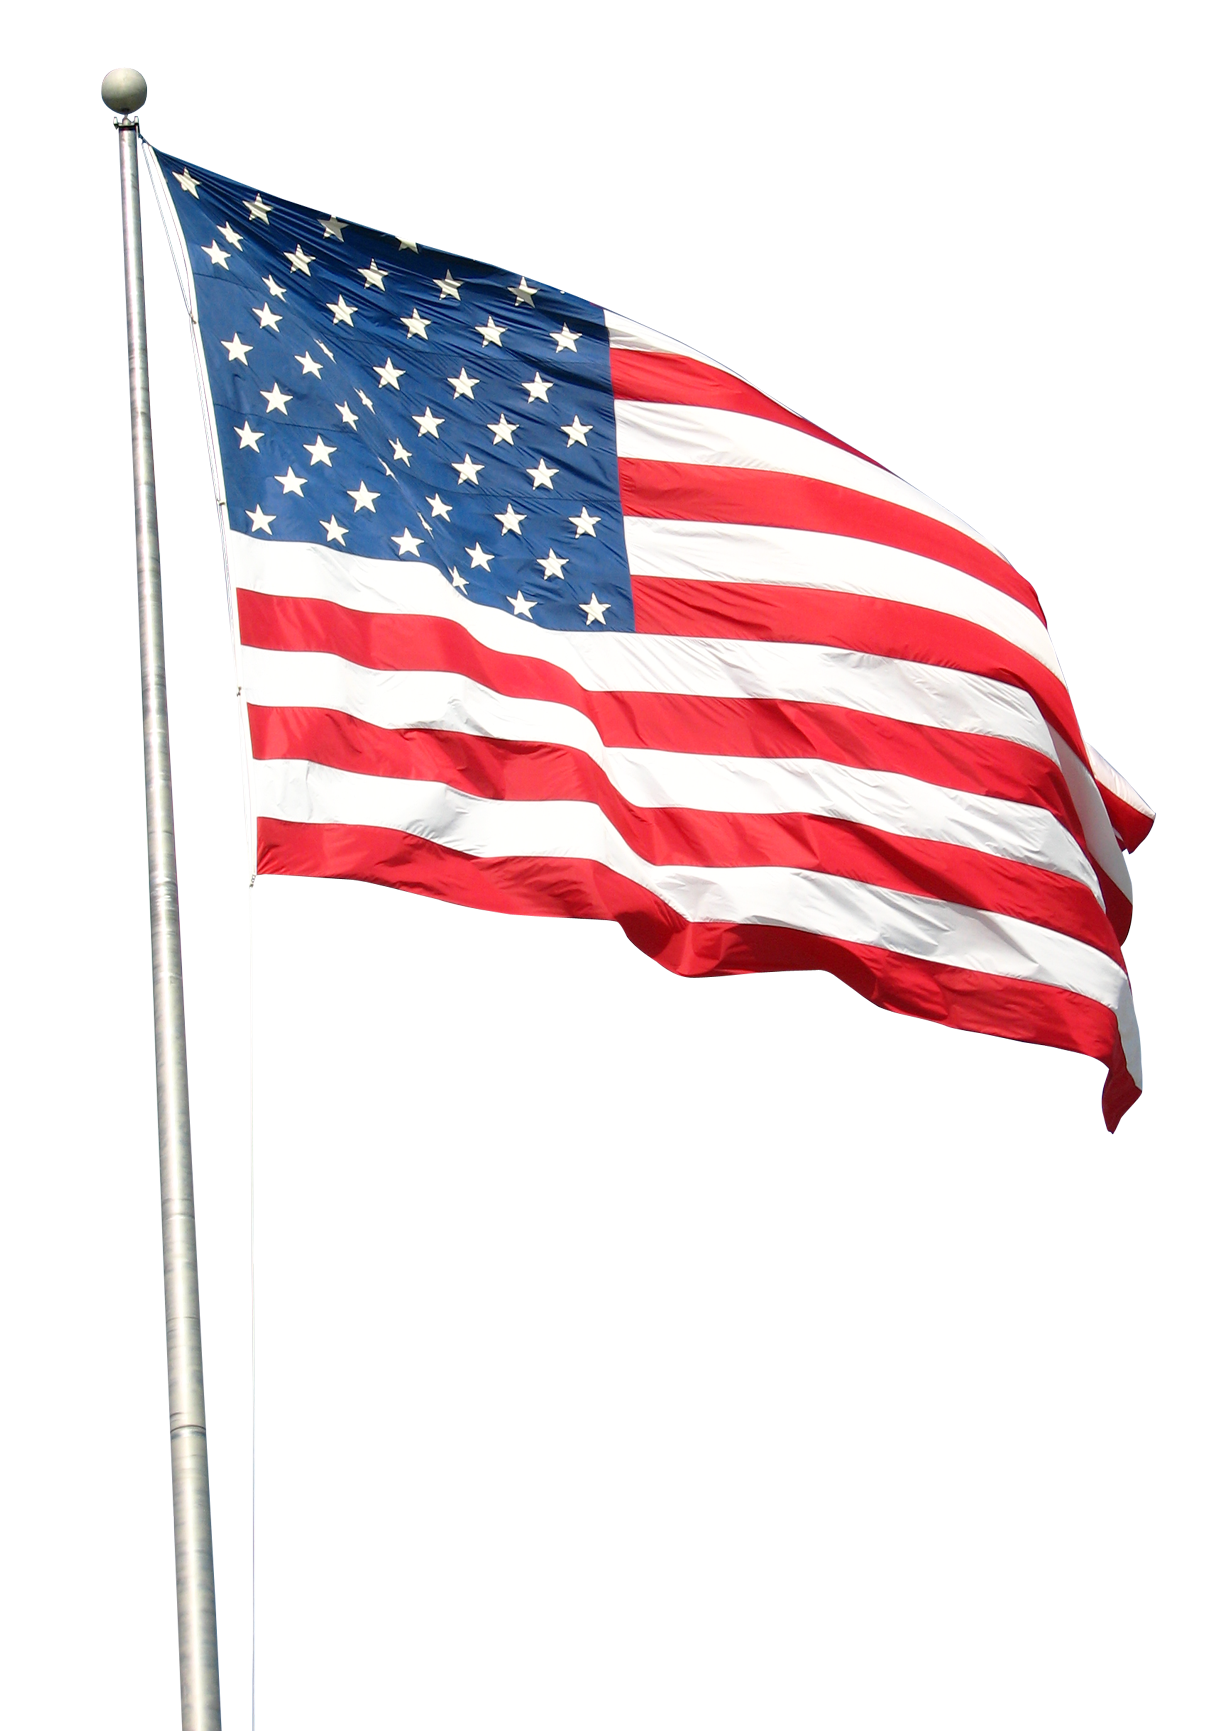 American Flag PNG Transparent Image - PngPix